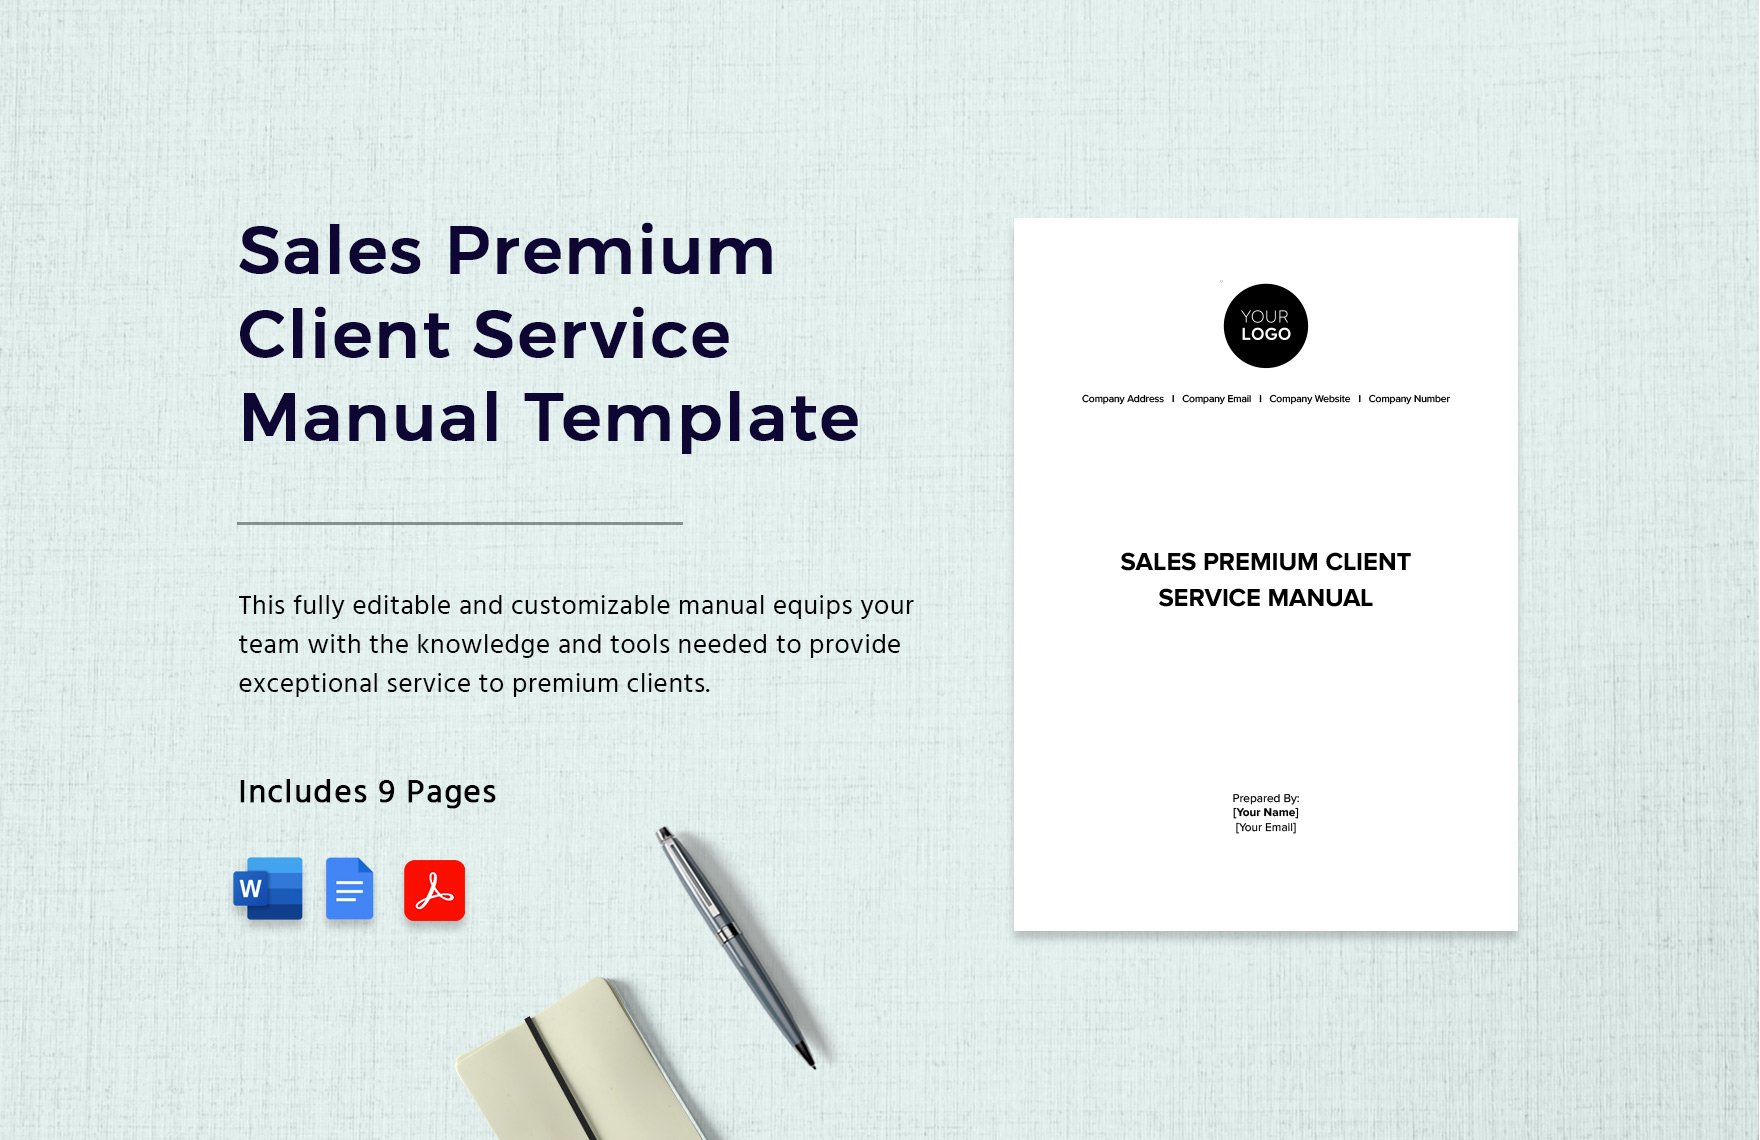 Sales Premium Client Service Manual Template in Word, Google Docs, PDF